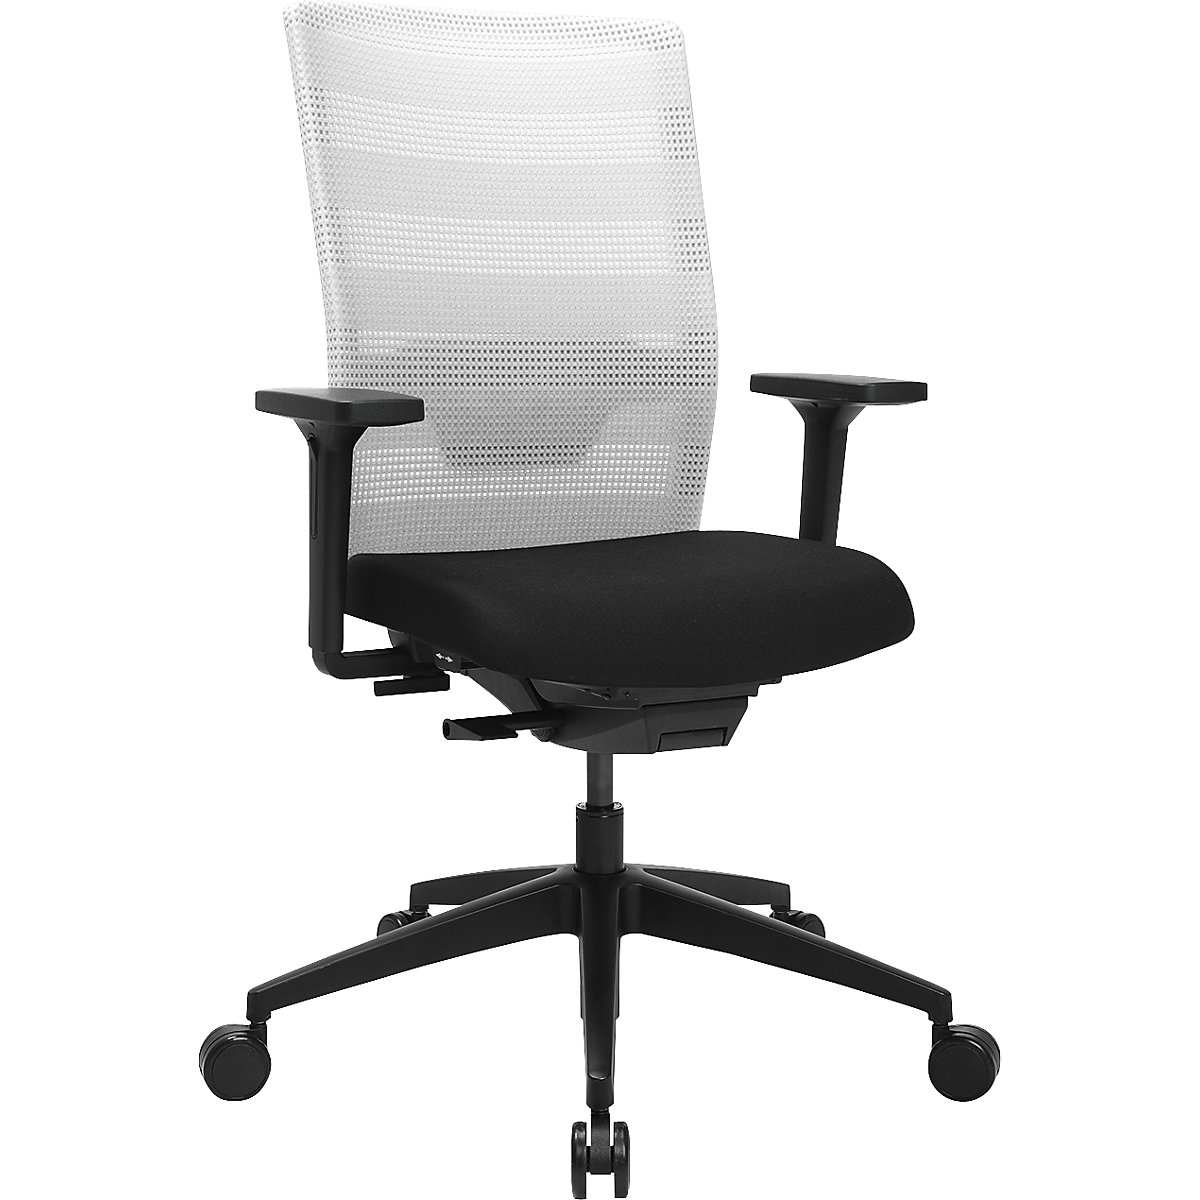 AirWork office swivel chair – Topstar